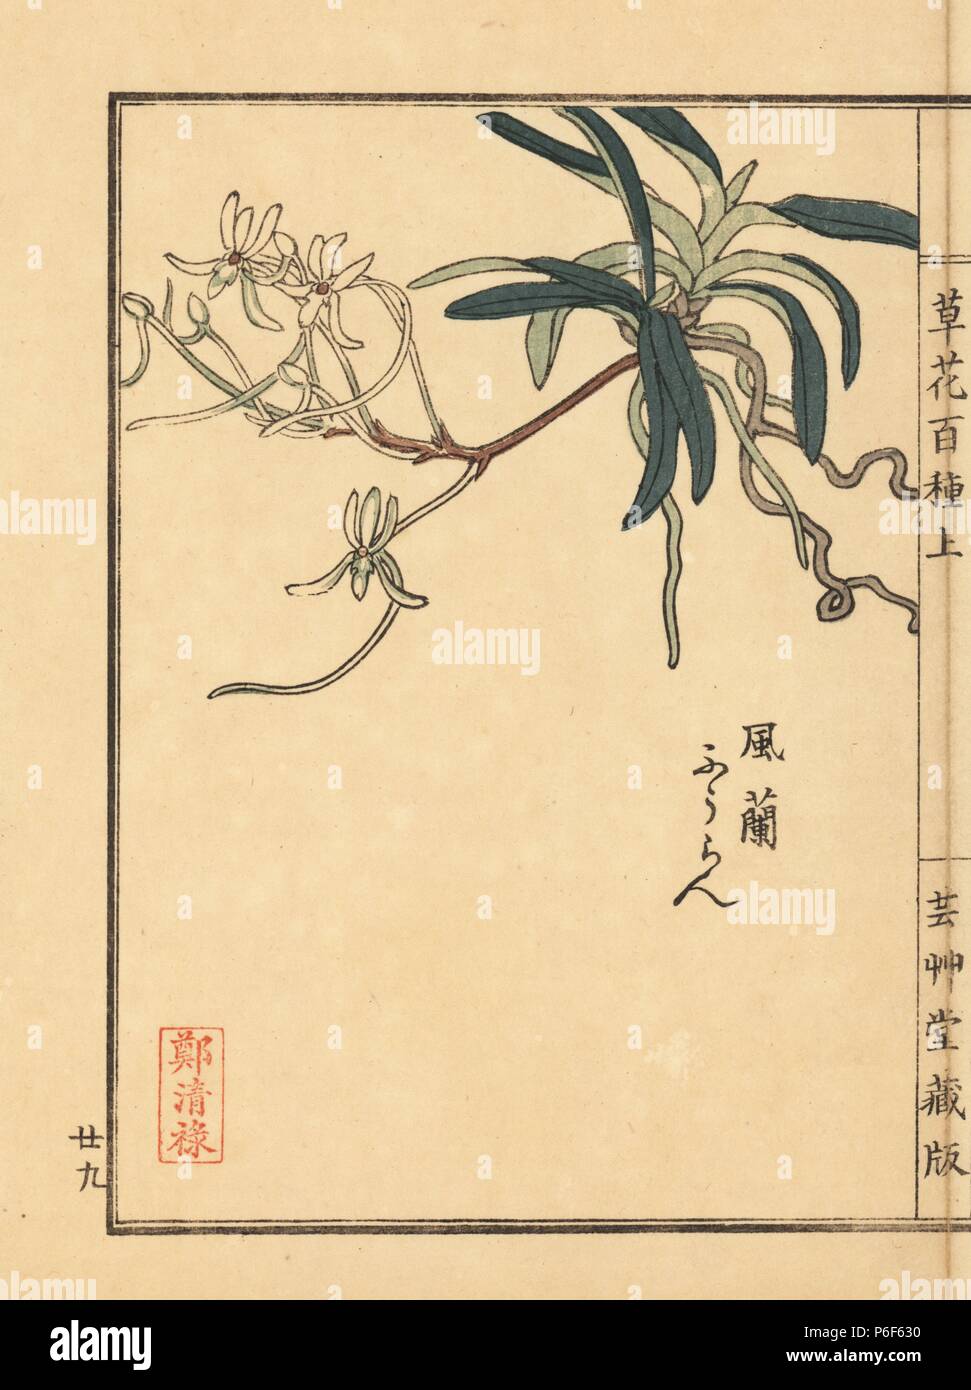 Fuuran, Neofinetia falcata. Vulnerable. Handcoloured woodblock print by Kono Bairei from Kusa Bana Hyakushu (One Hundred Varieties of Flowers), Tokyo, Yamada, 1901. Stock Photo